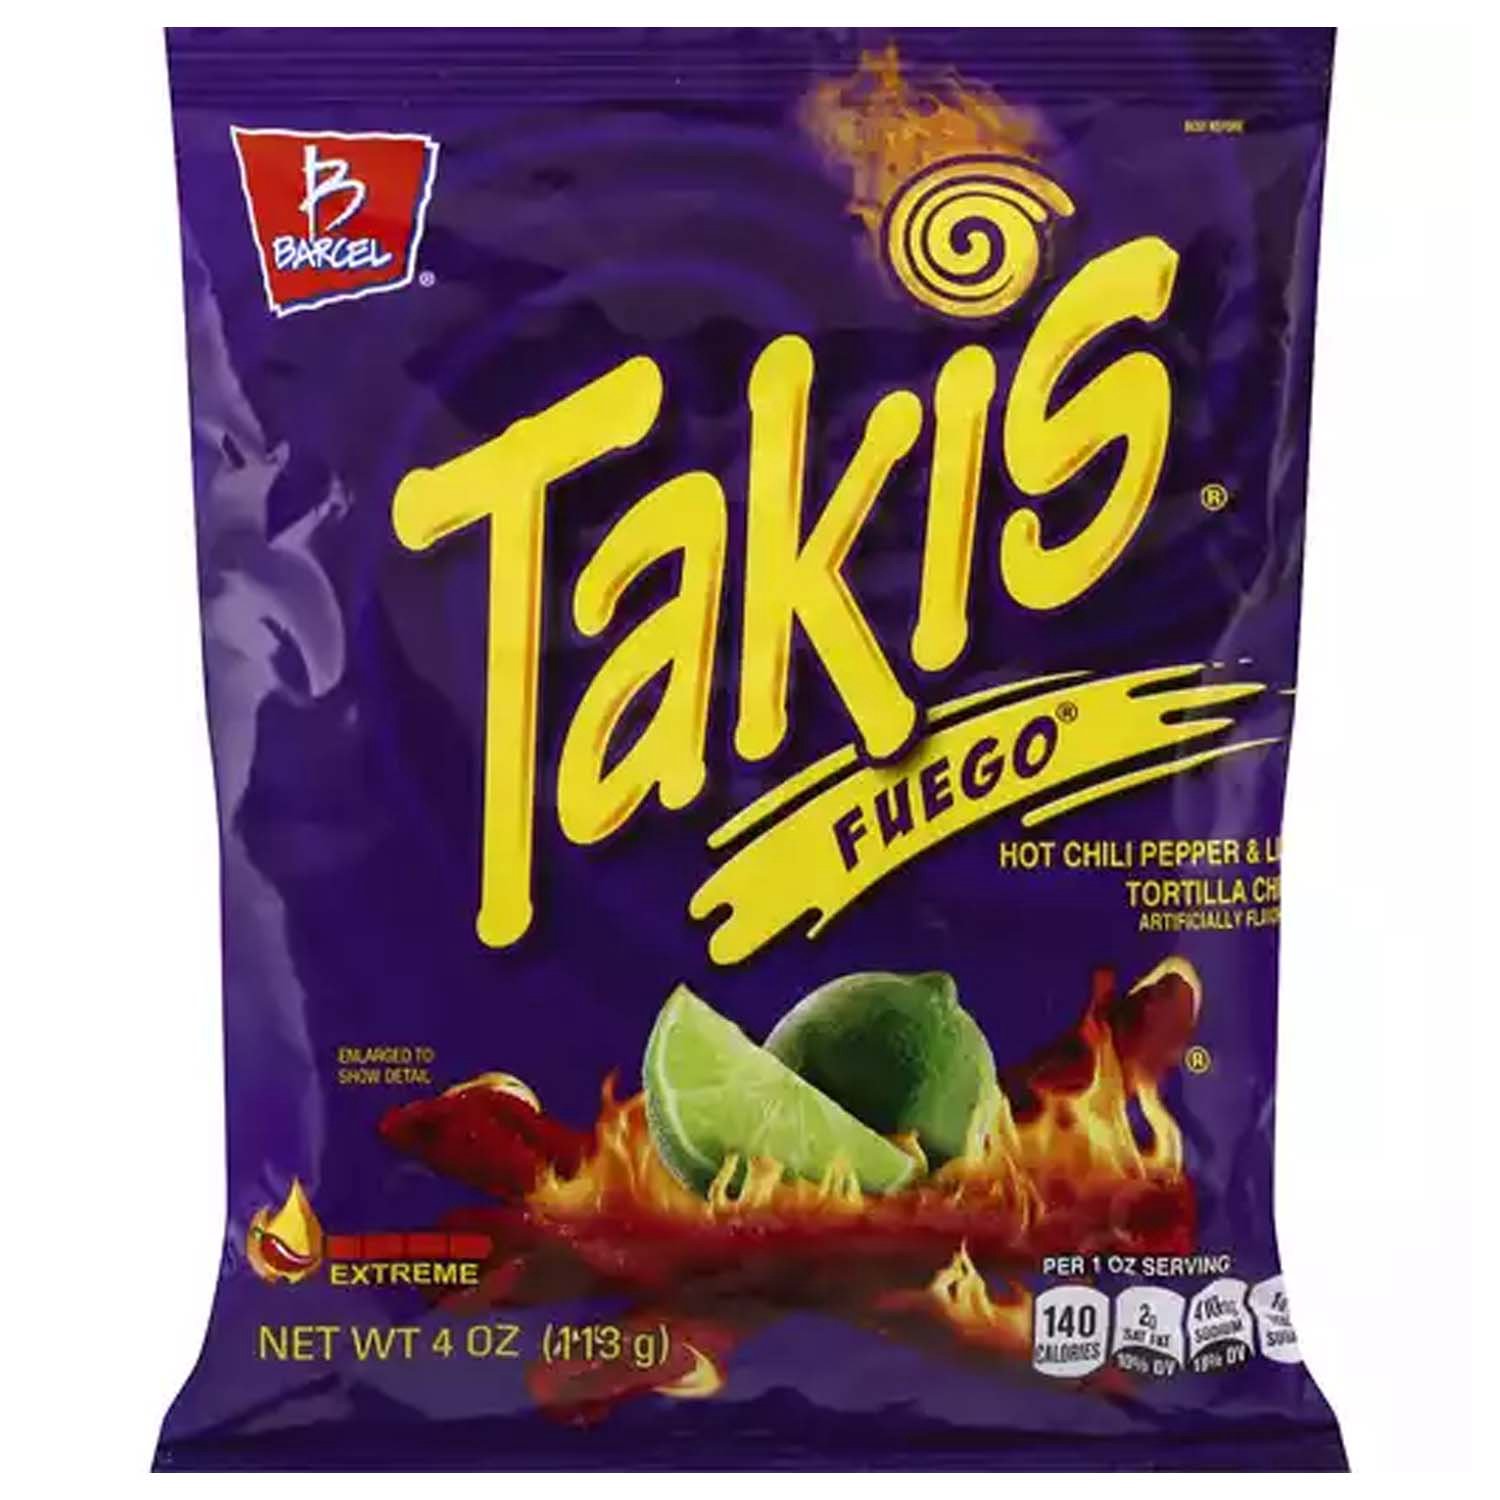 TAKIS FUEGO: THE BEST FLAVOR OF TAKIS CHIPS! • Vietnam FMCG GOODS Wholesaler